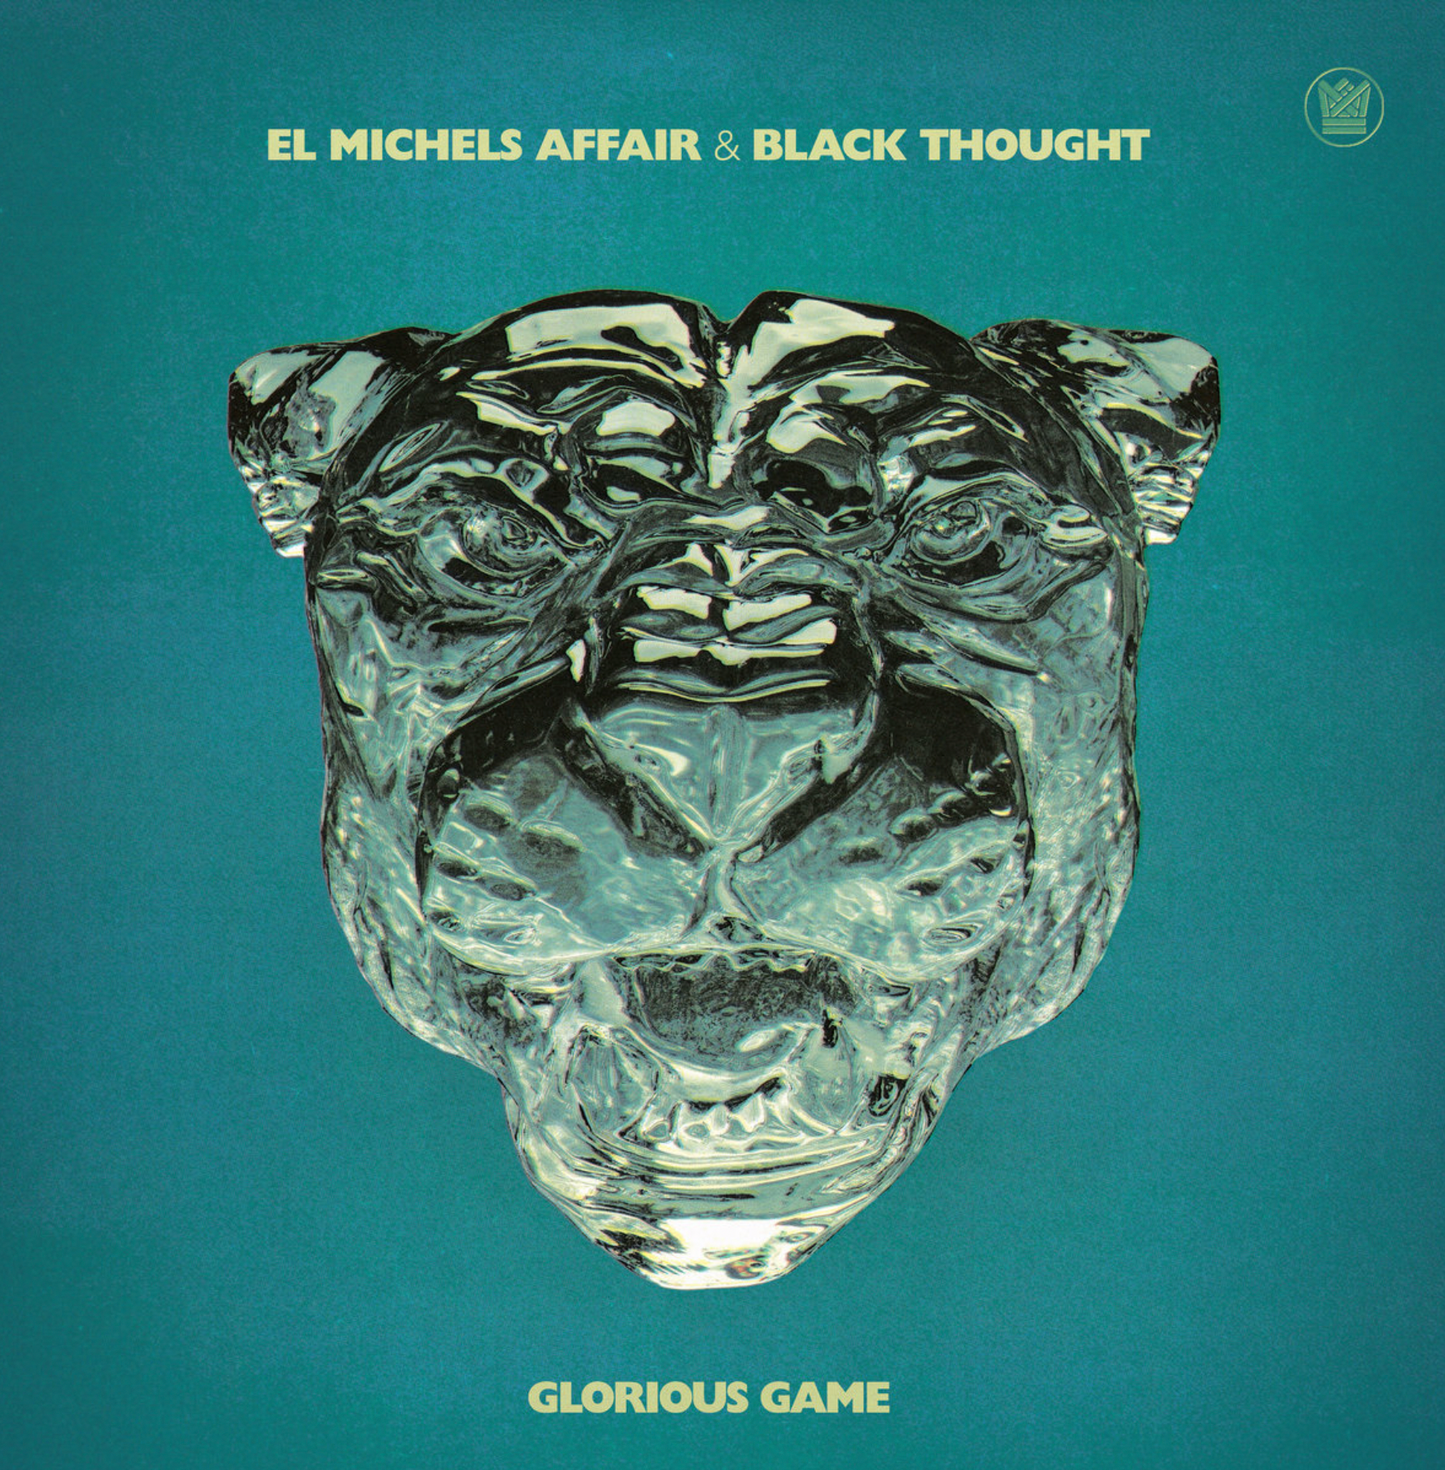 El Michels Affair, Black Thought 'Glorious Game' LP